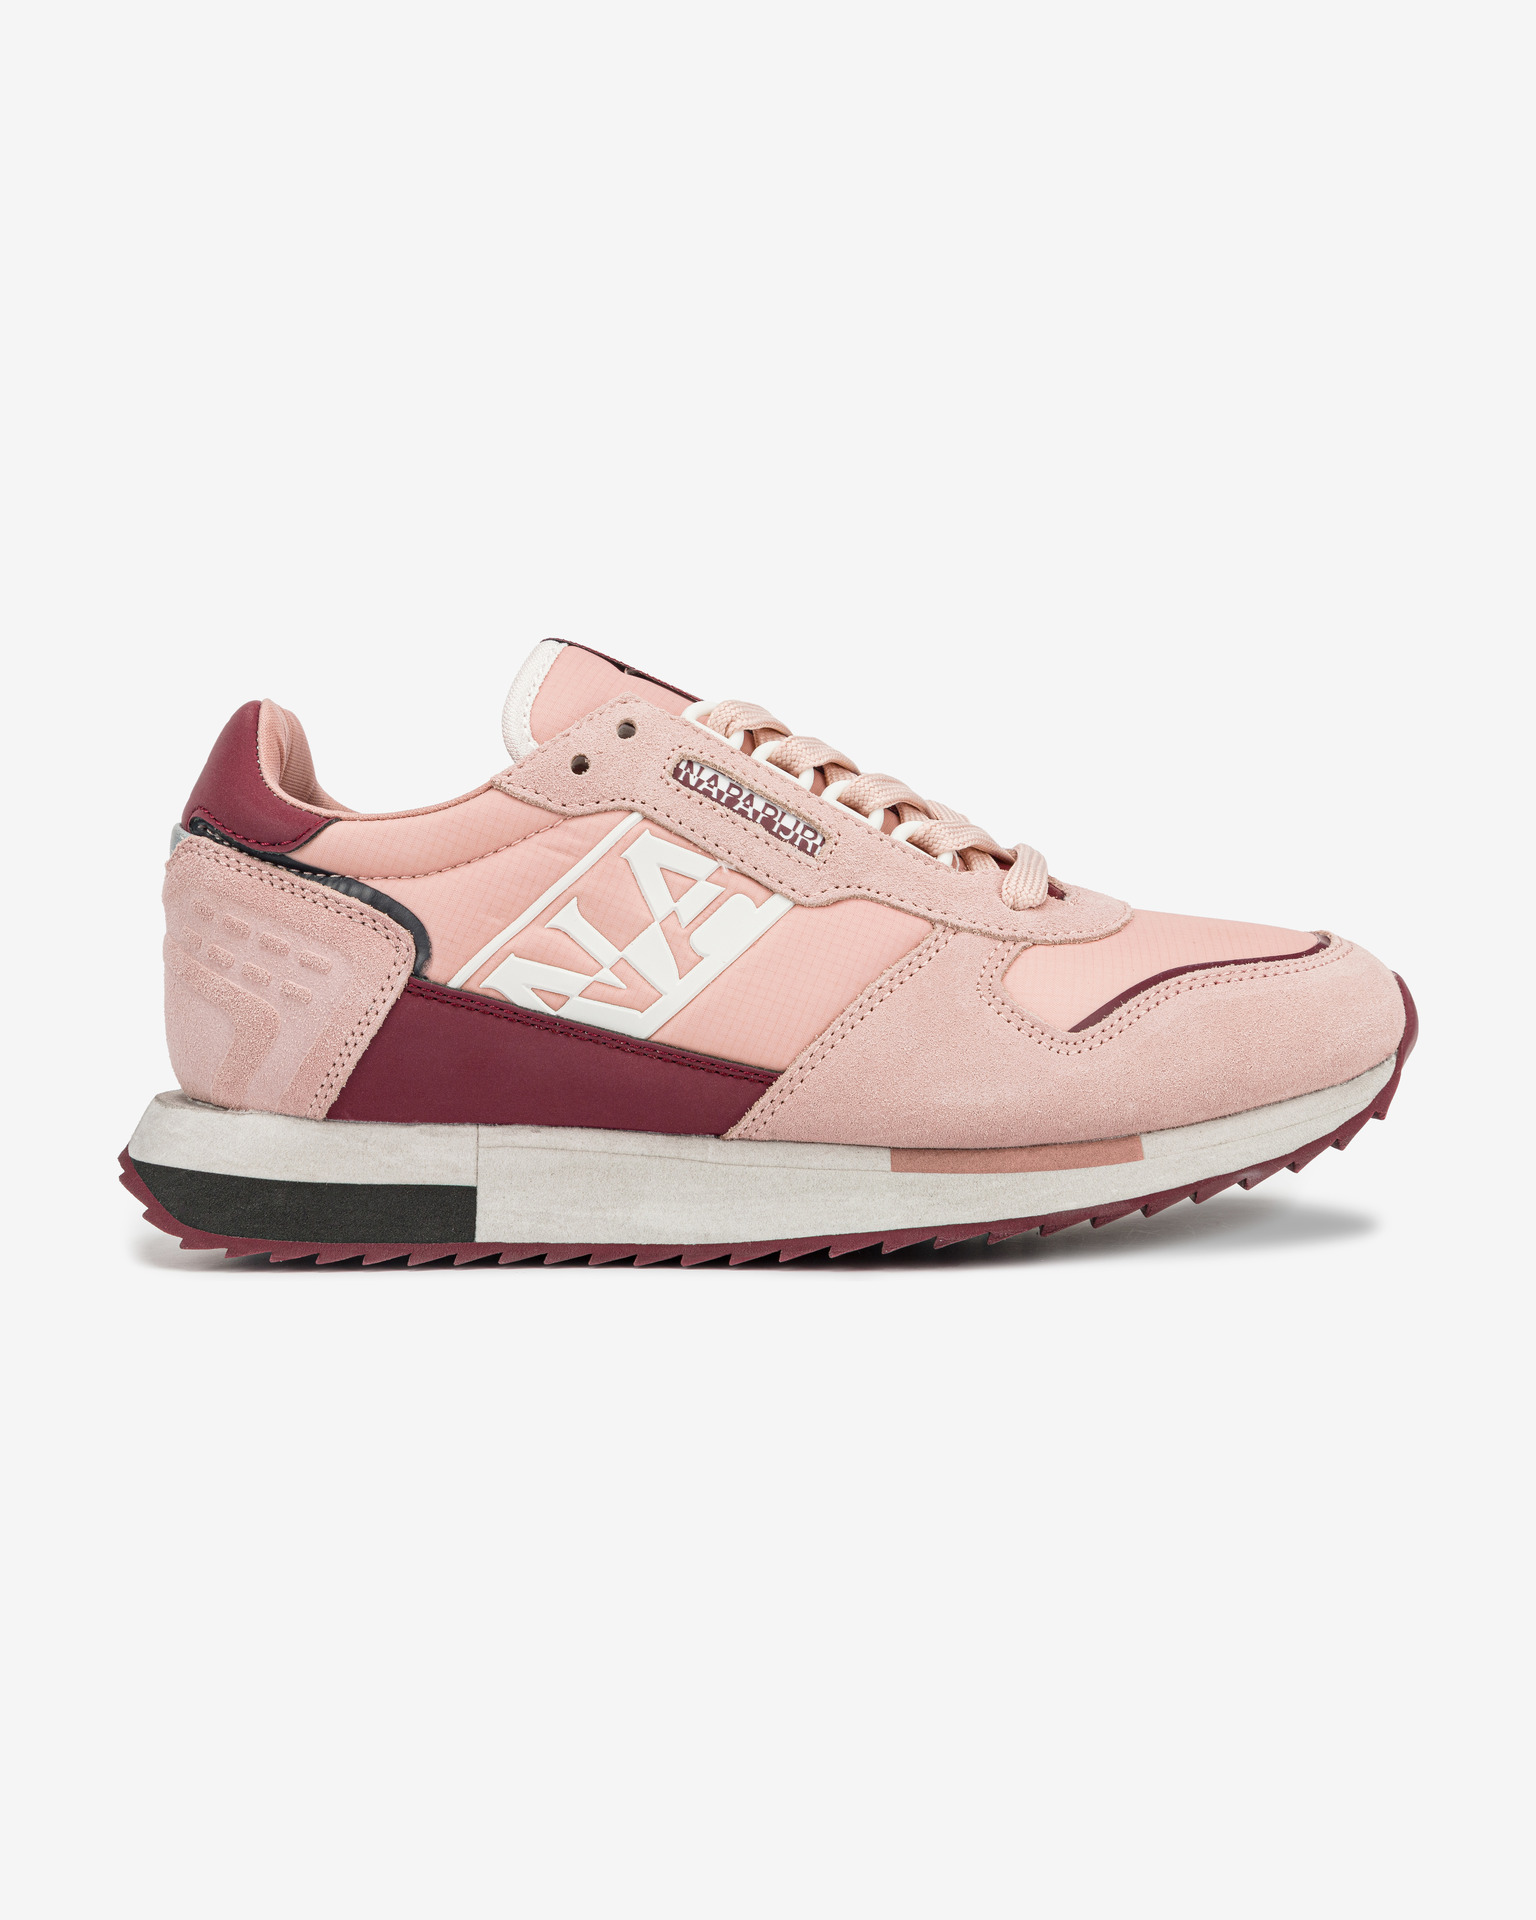  NAPAPIJRI Women's Shoes NP0A4GA8 Pink Suede Sneaker Running  Outdoor Mountain Suede, pink, 6 US